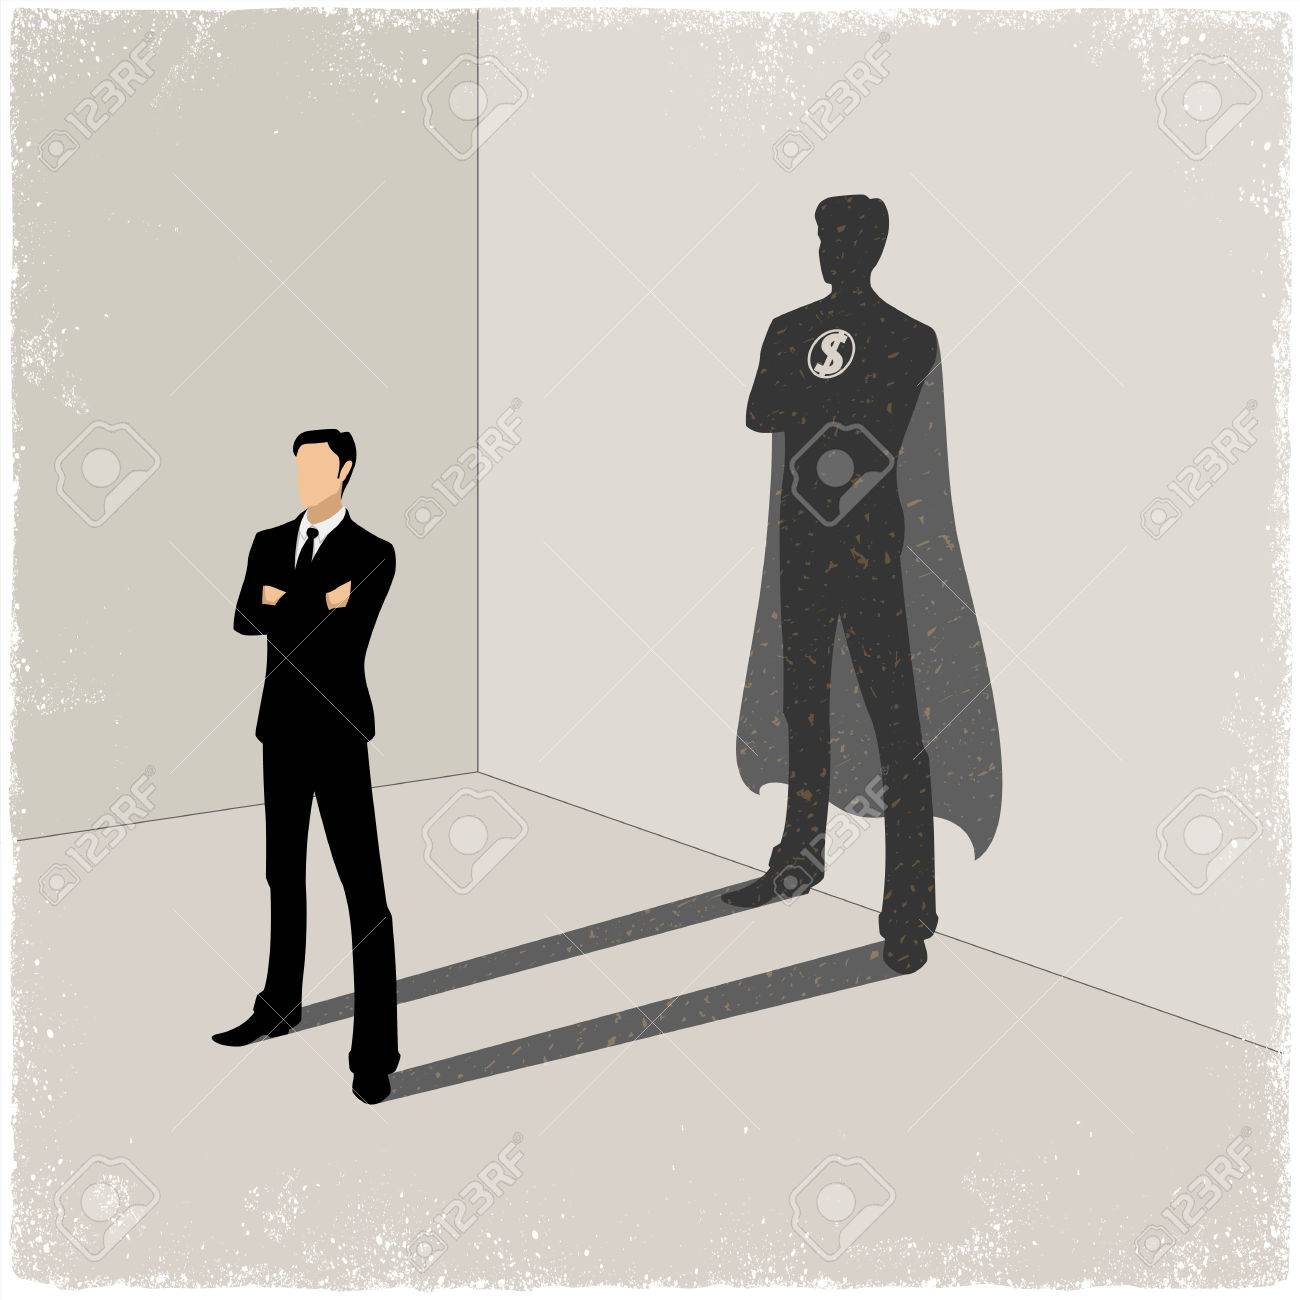 29413568-businessman-casting-superhero-shadow-in-vector.jpg